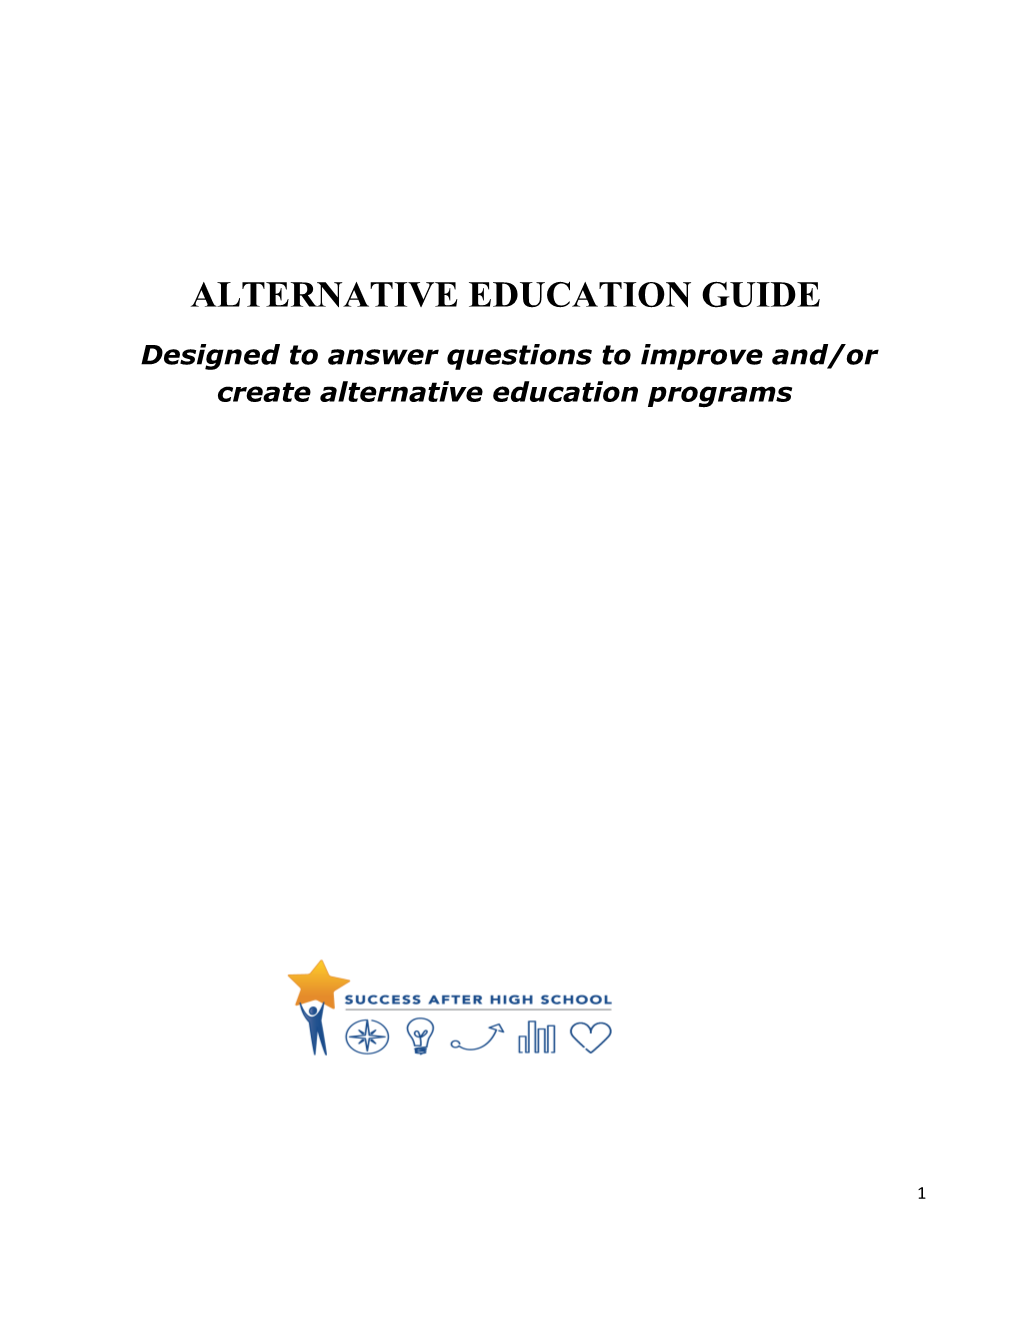 Alternative Education Guide